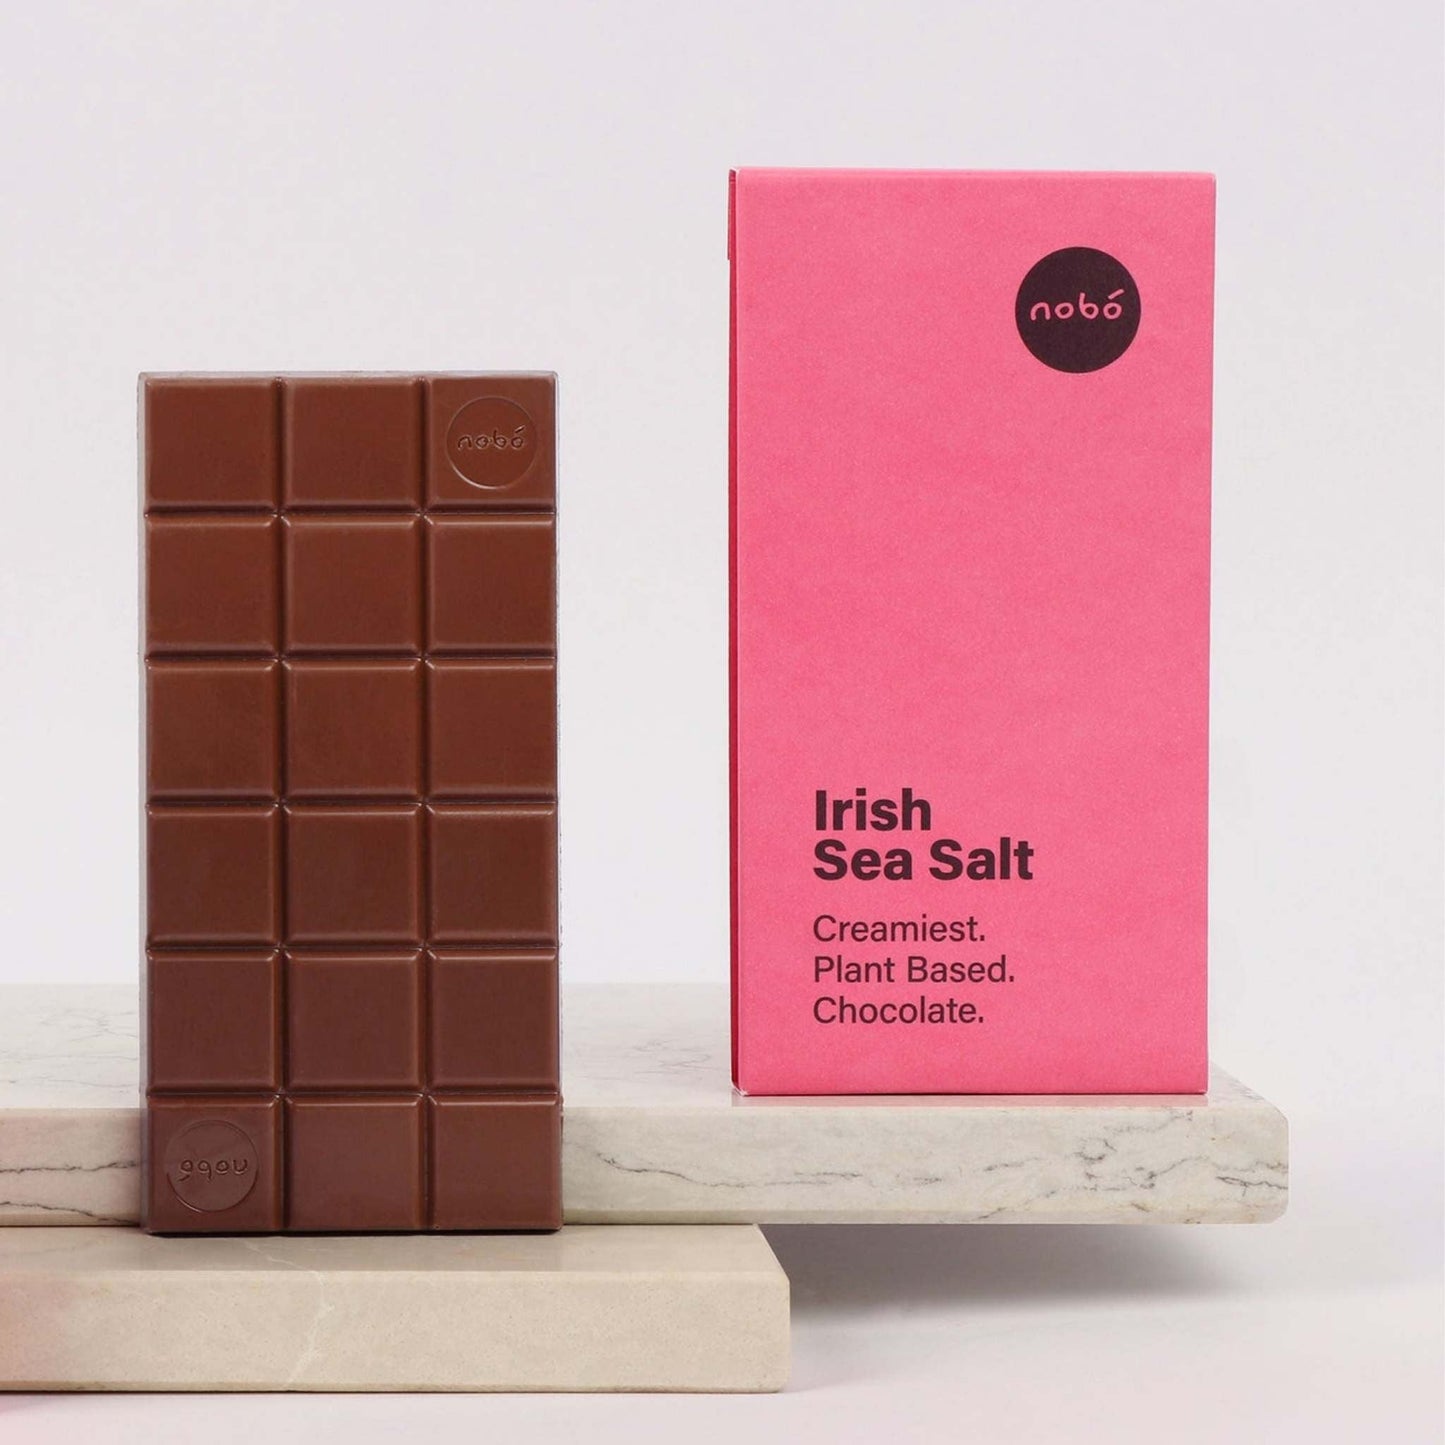 Nobó Chocolate Chocolate Irish Sea Salt Large Bar 80g - Nobó Chocolate